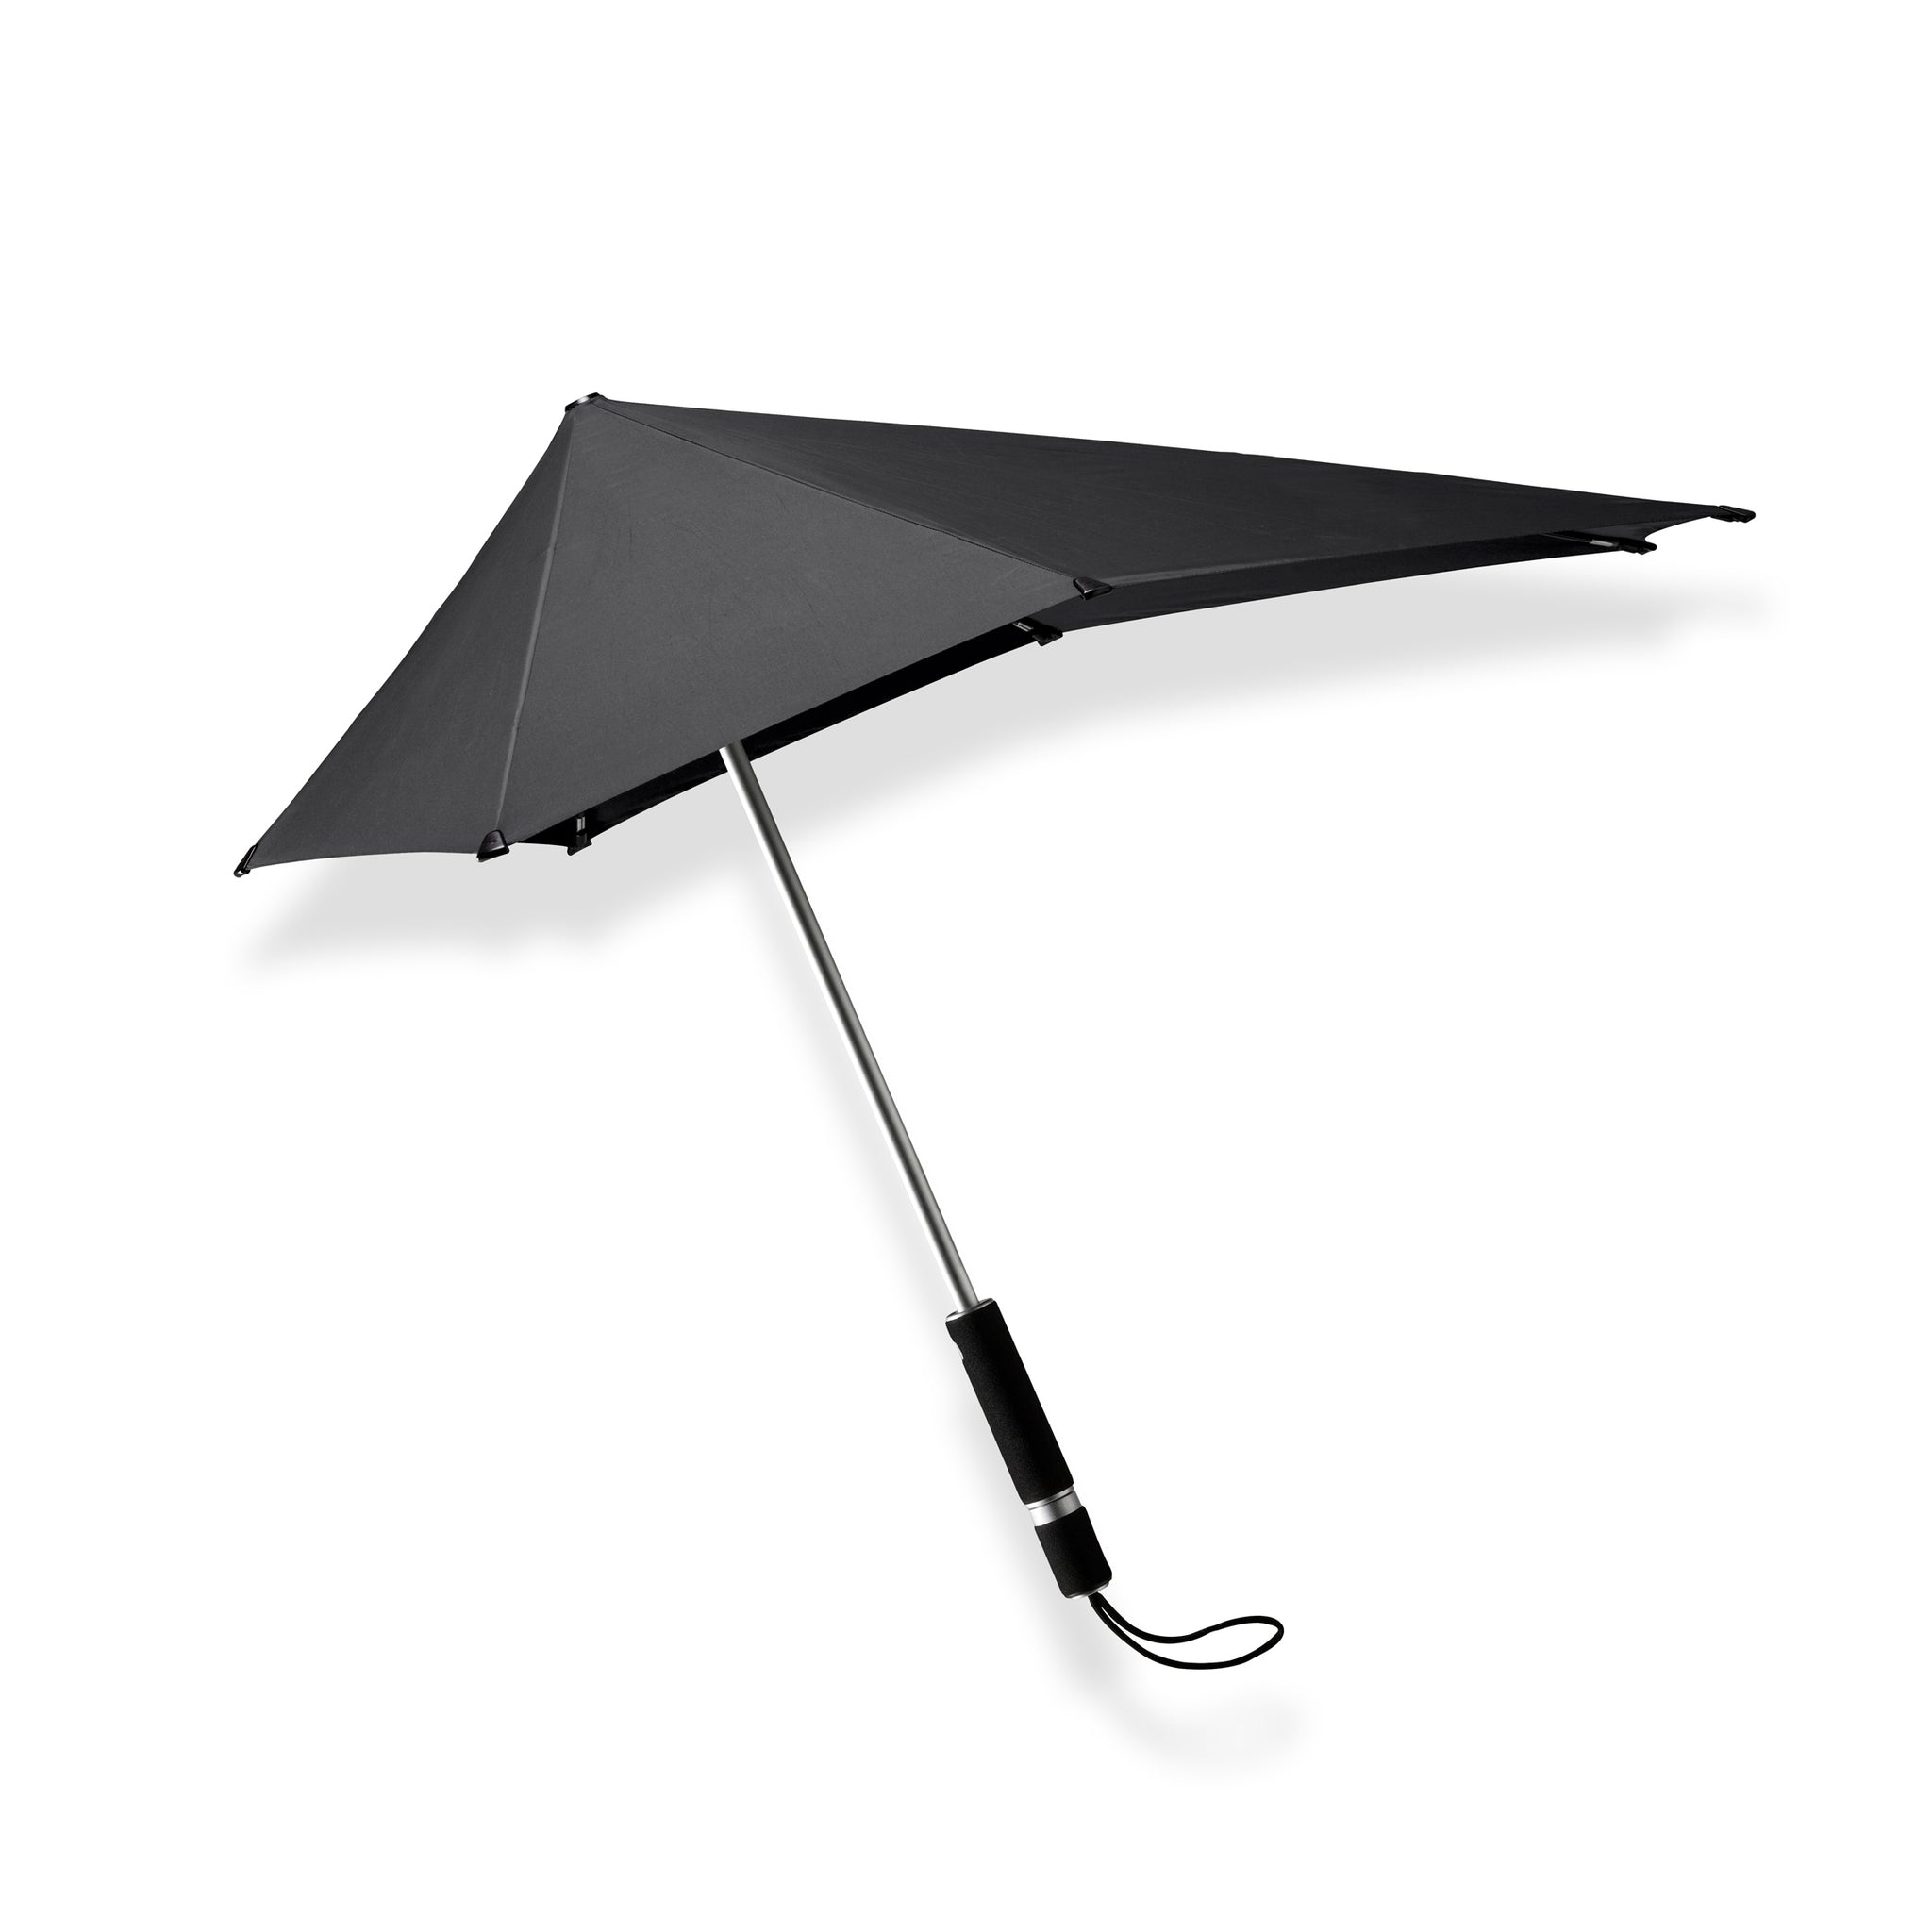 Senz Paraplu Original│Pure Black│Storm Paraplu│product foto zijkant open